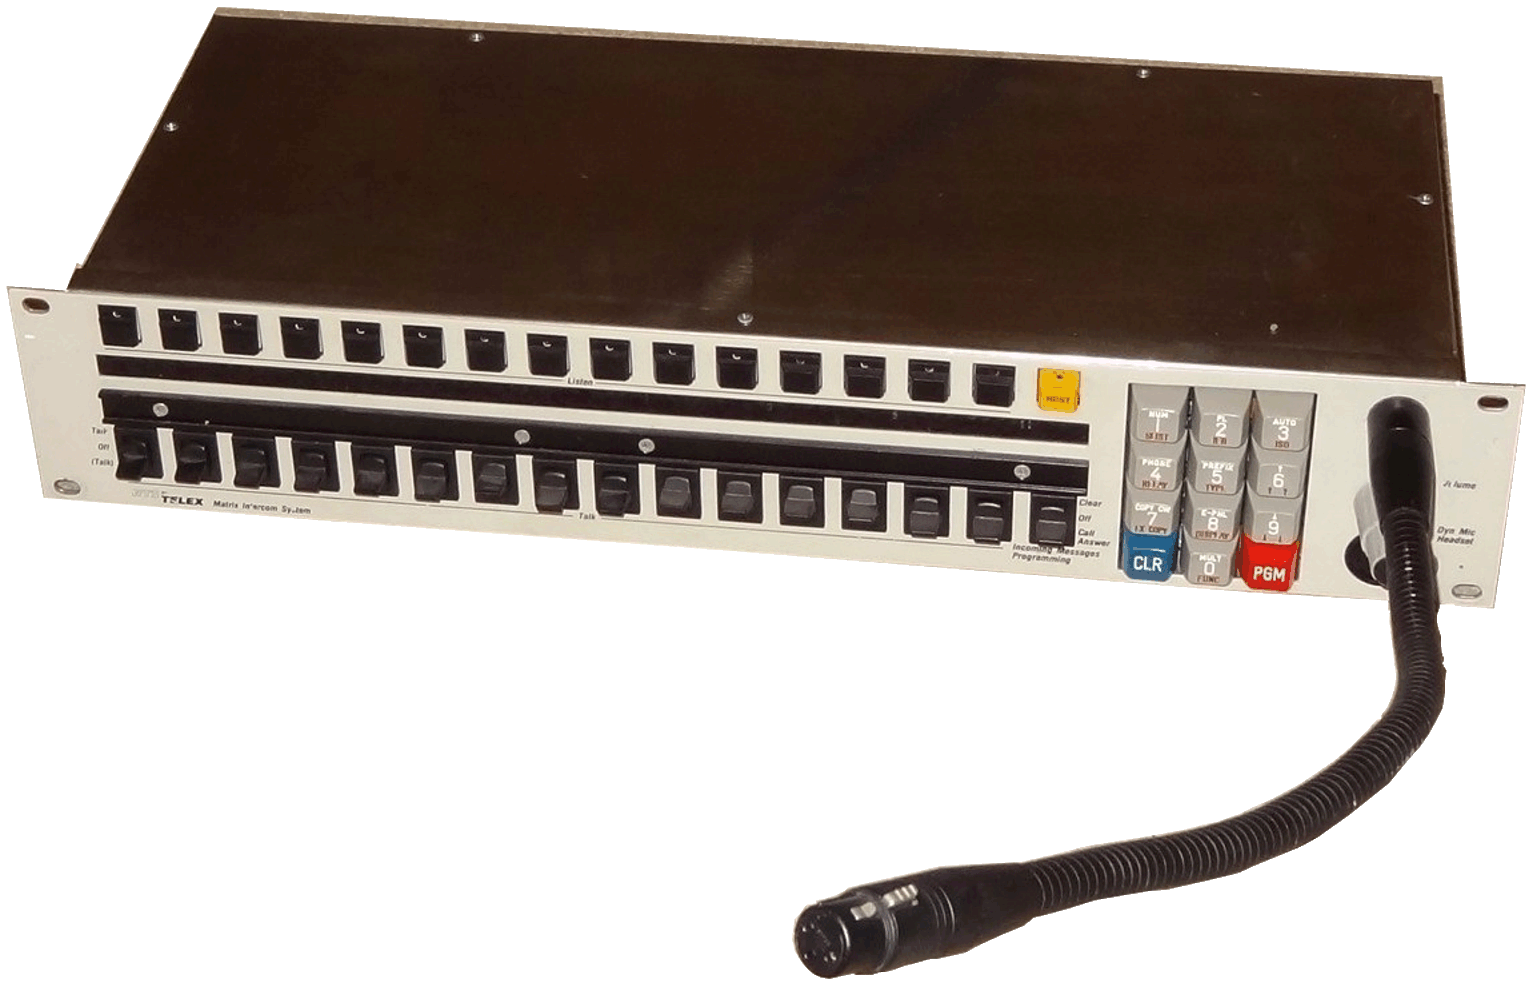 IKP-96 RTS Key Panel